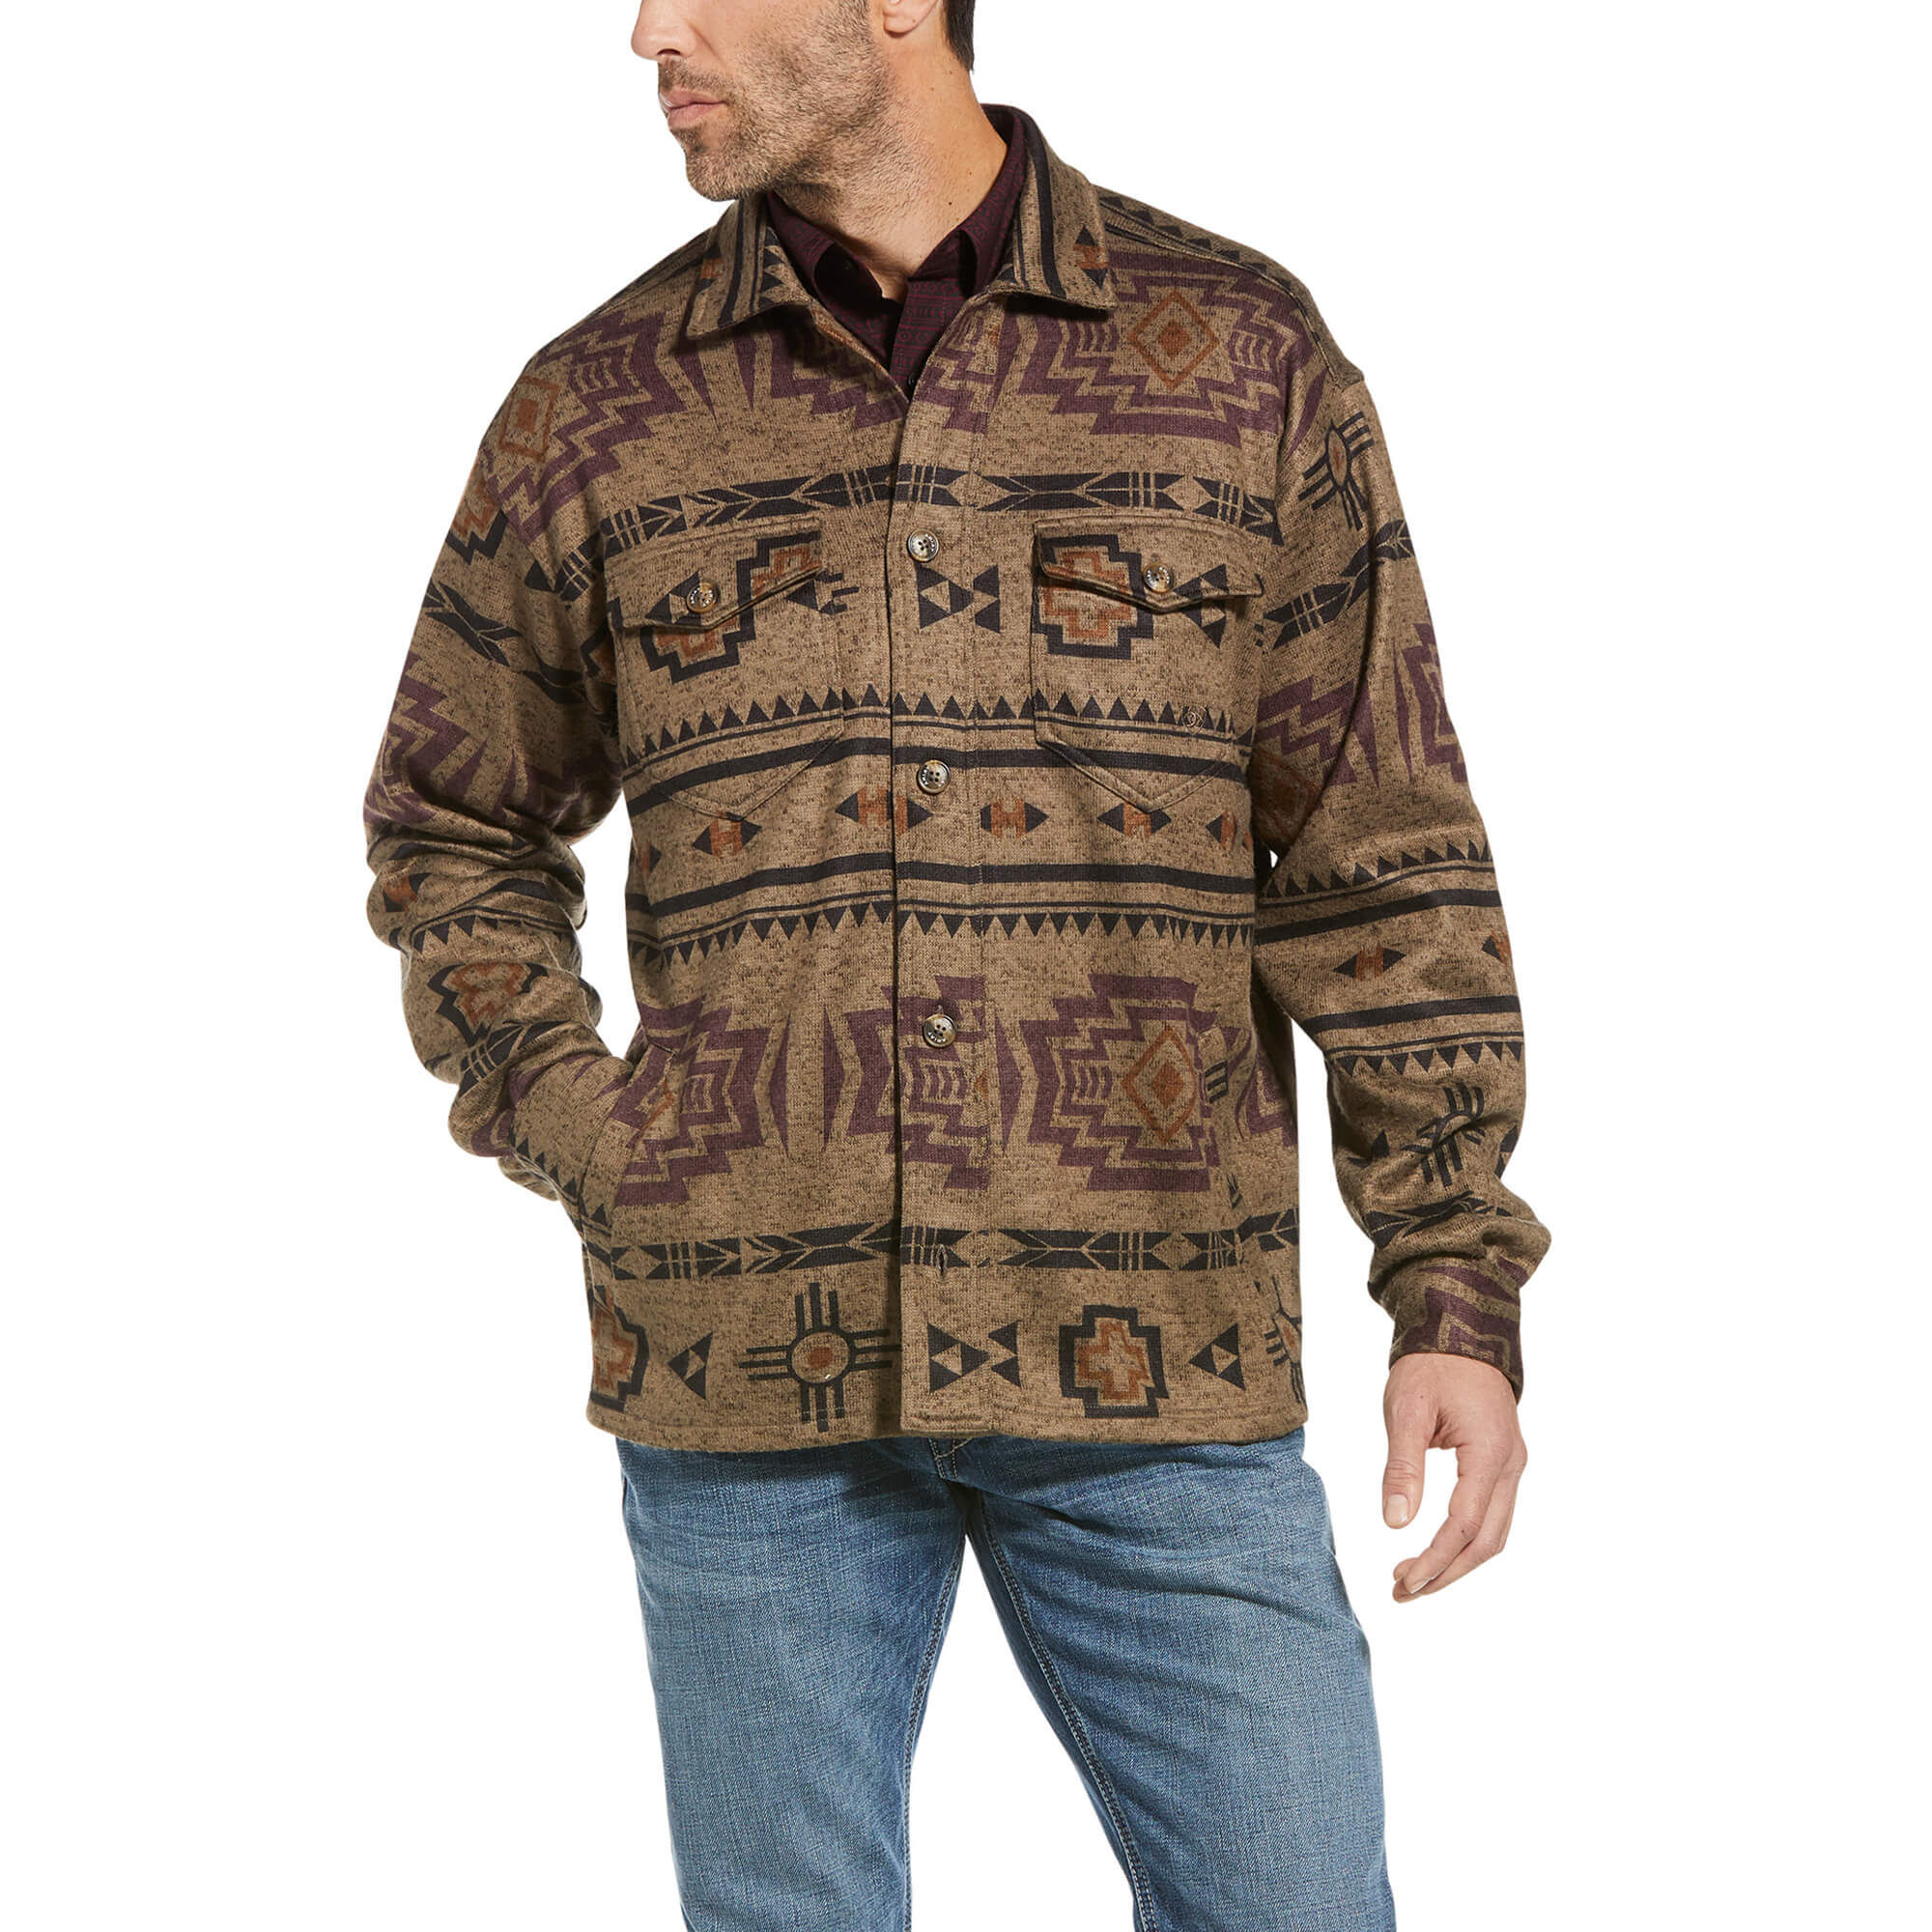 printed sweater